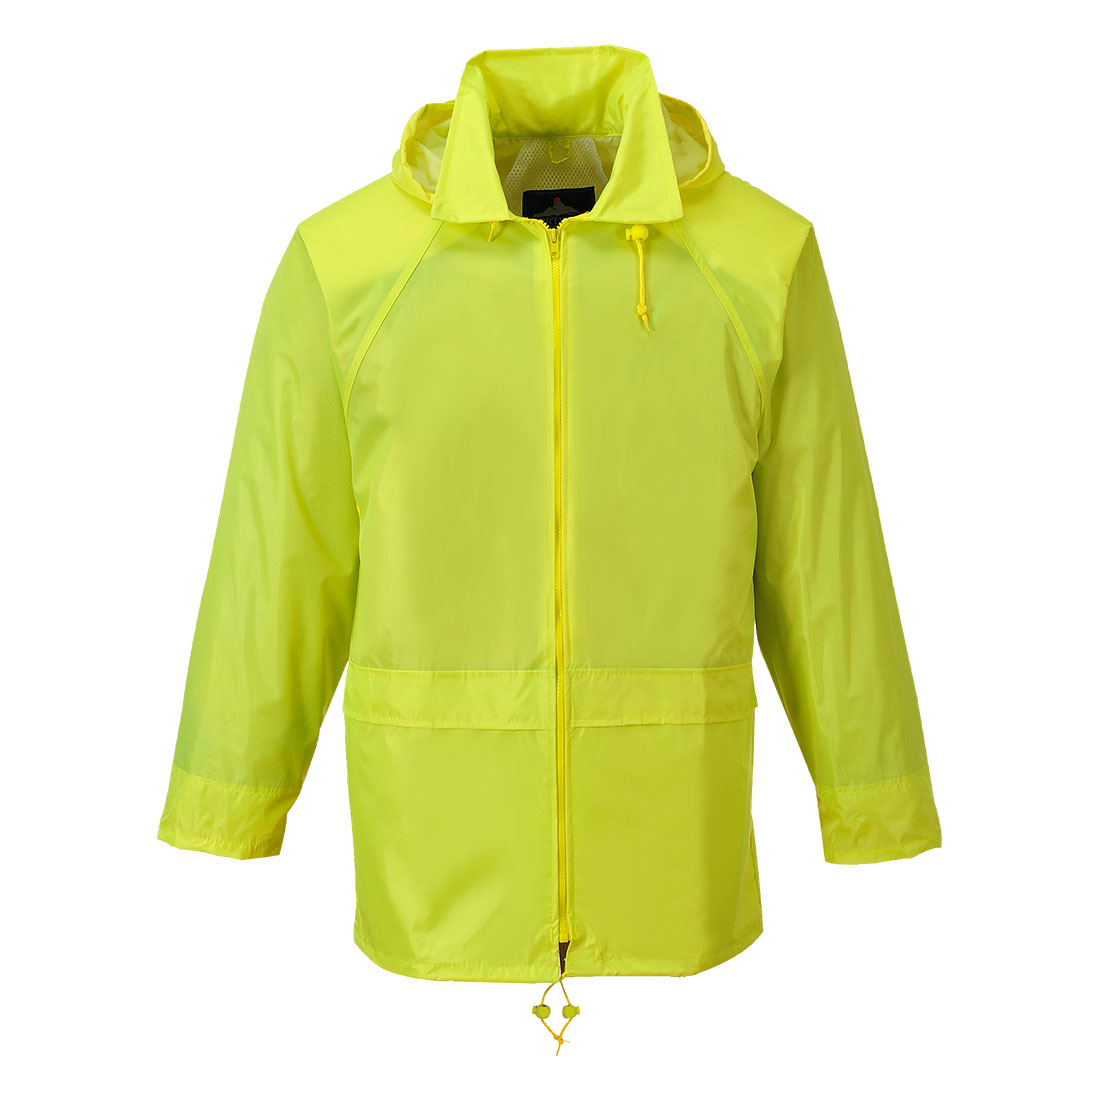 Classic Rain Jacket, Yellow  Size 3 XL R/Fit